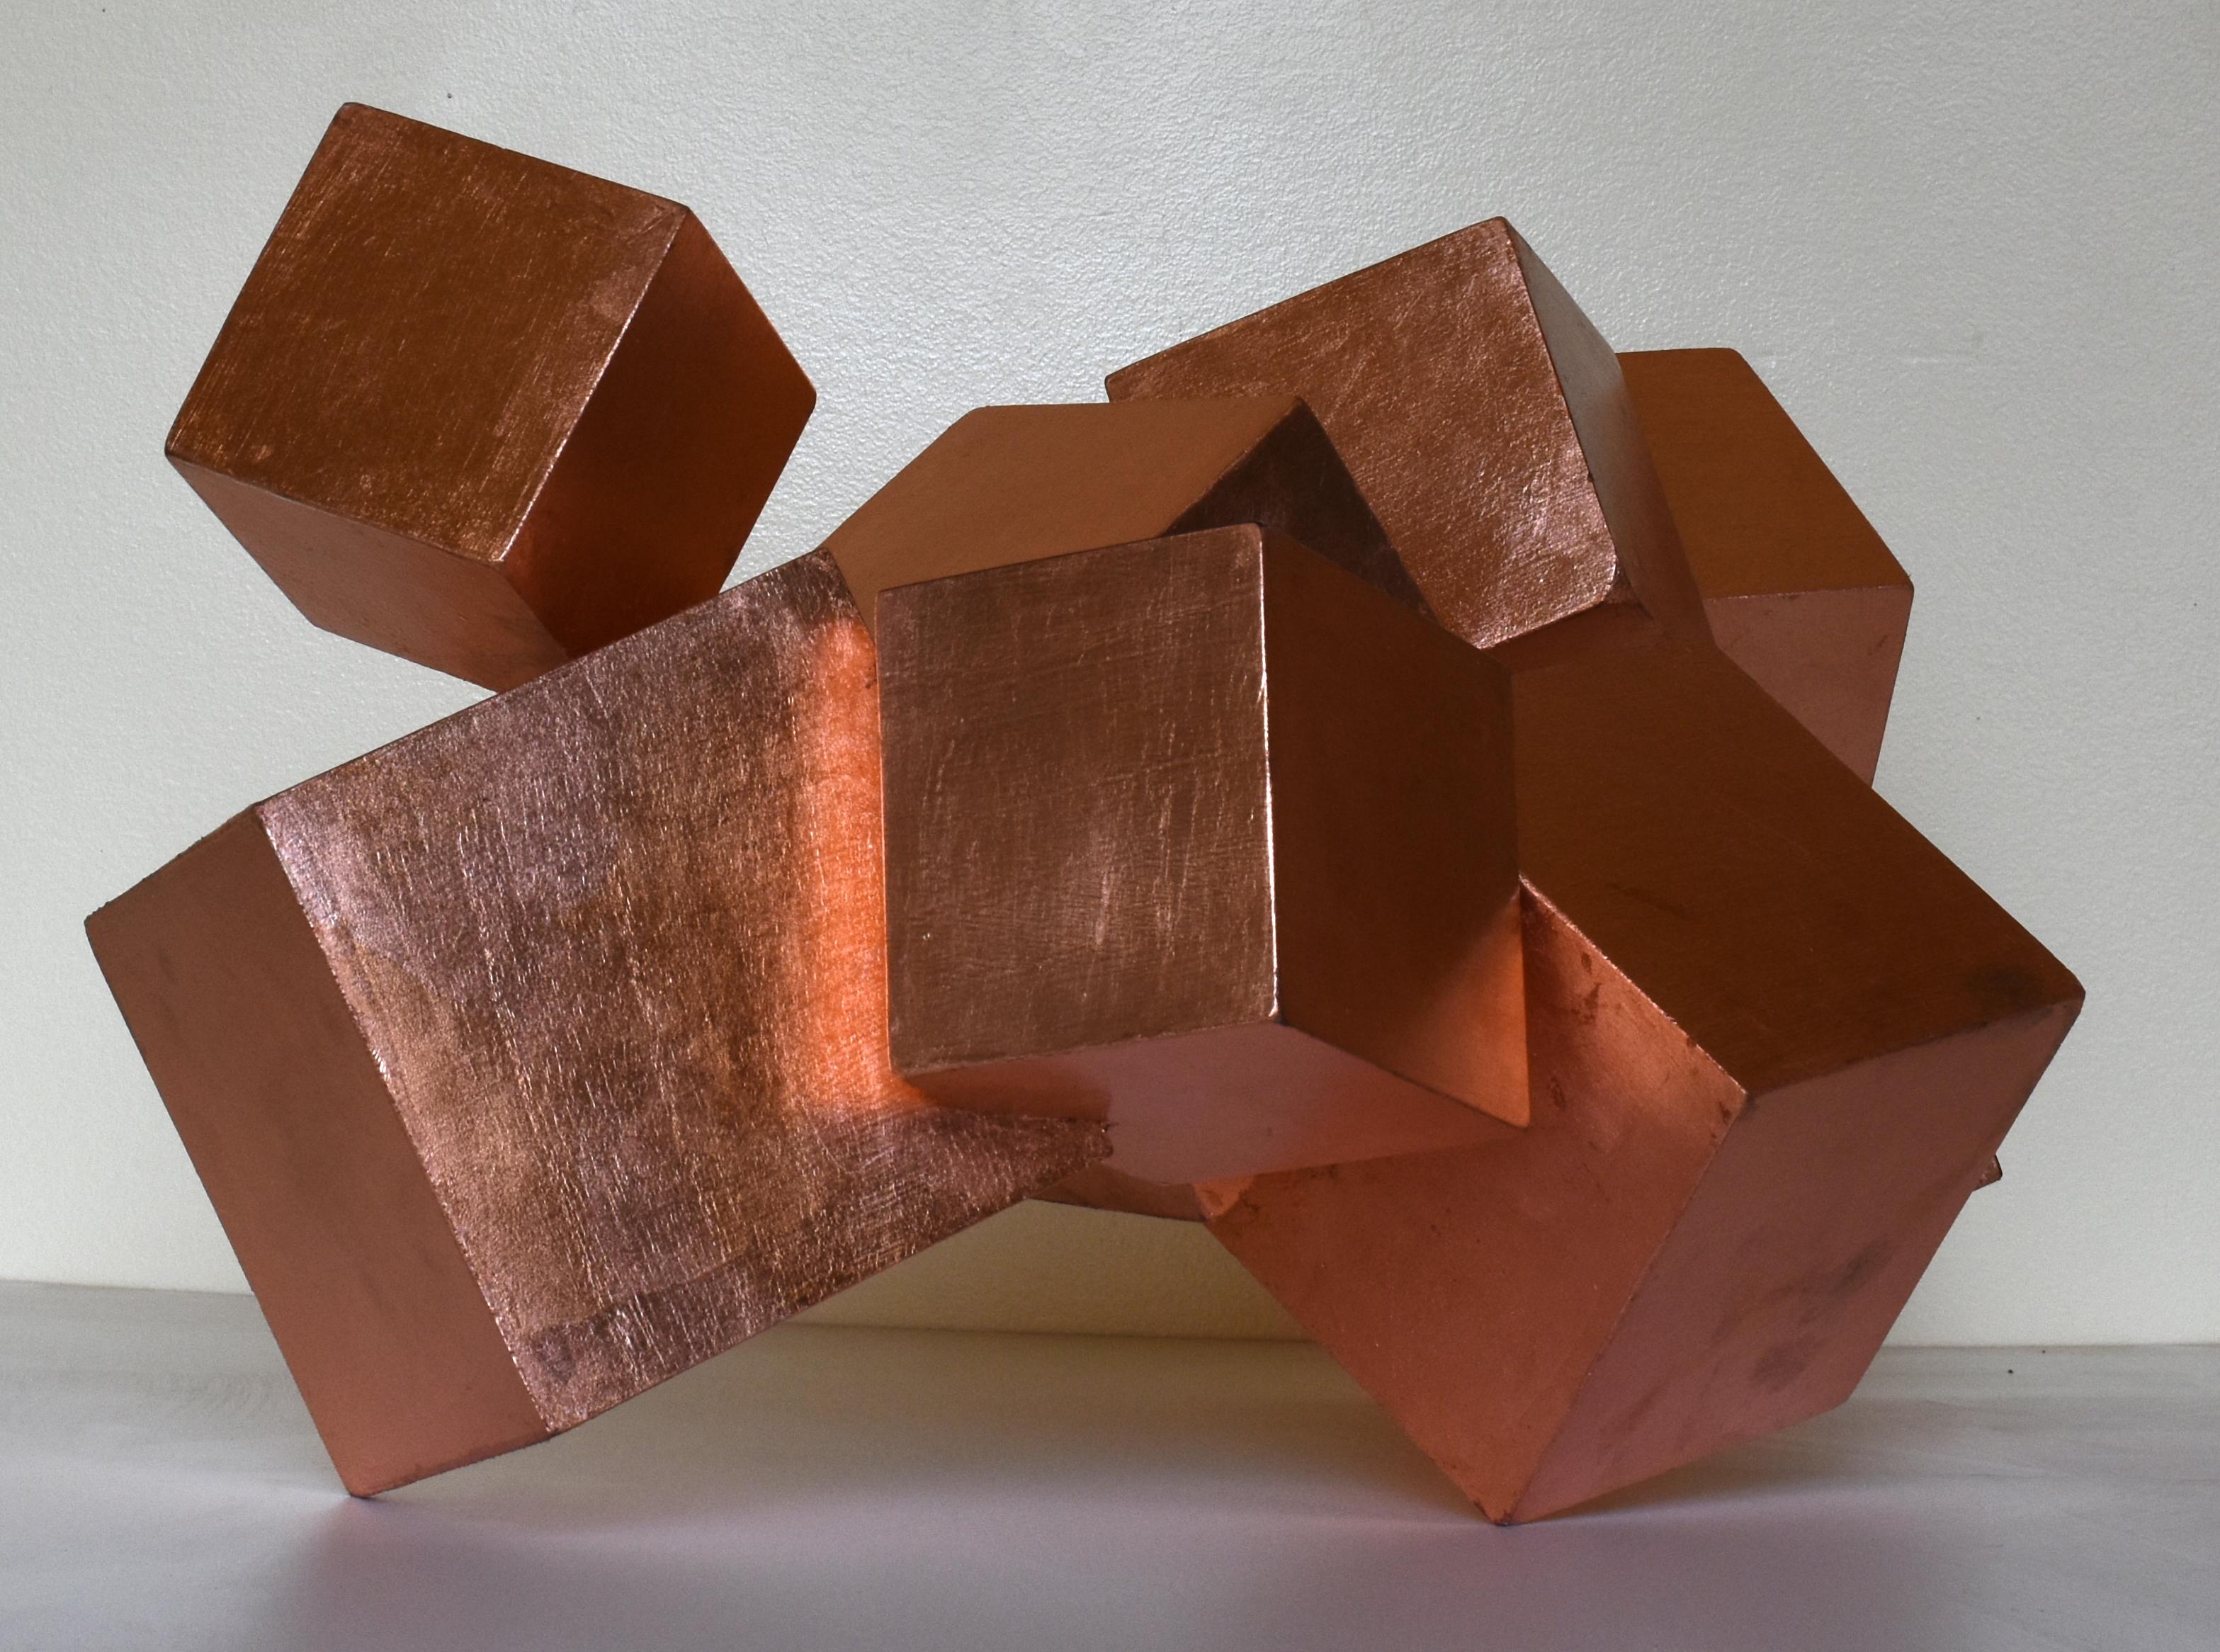 Copper and Mahogany Pyrite (exotic wood, metallic, cubic, table top sculpture) 5